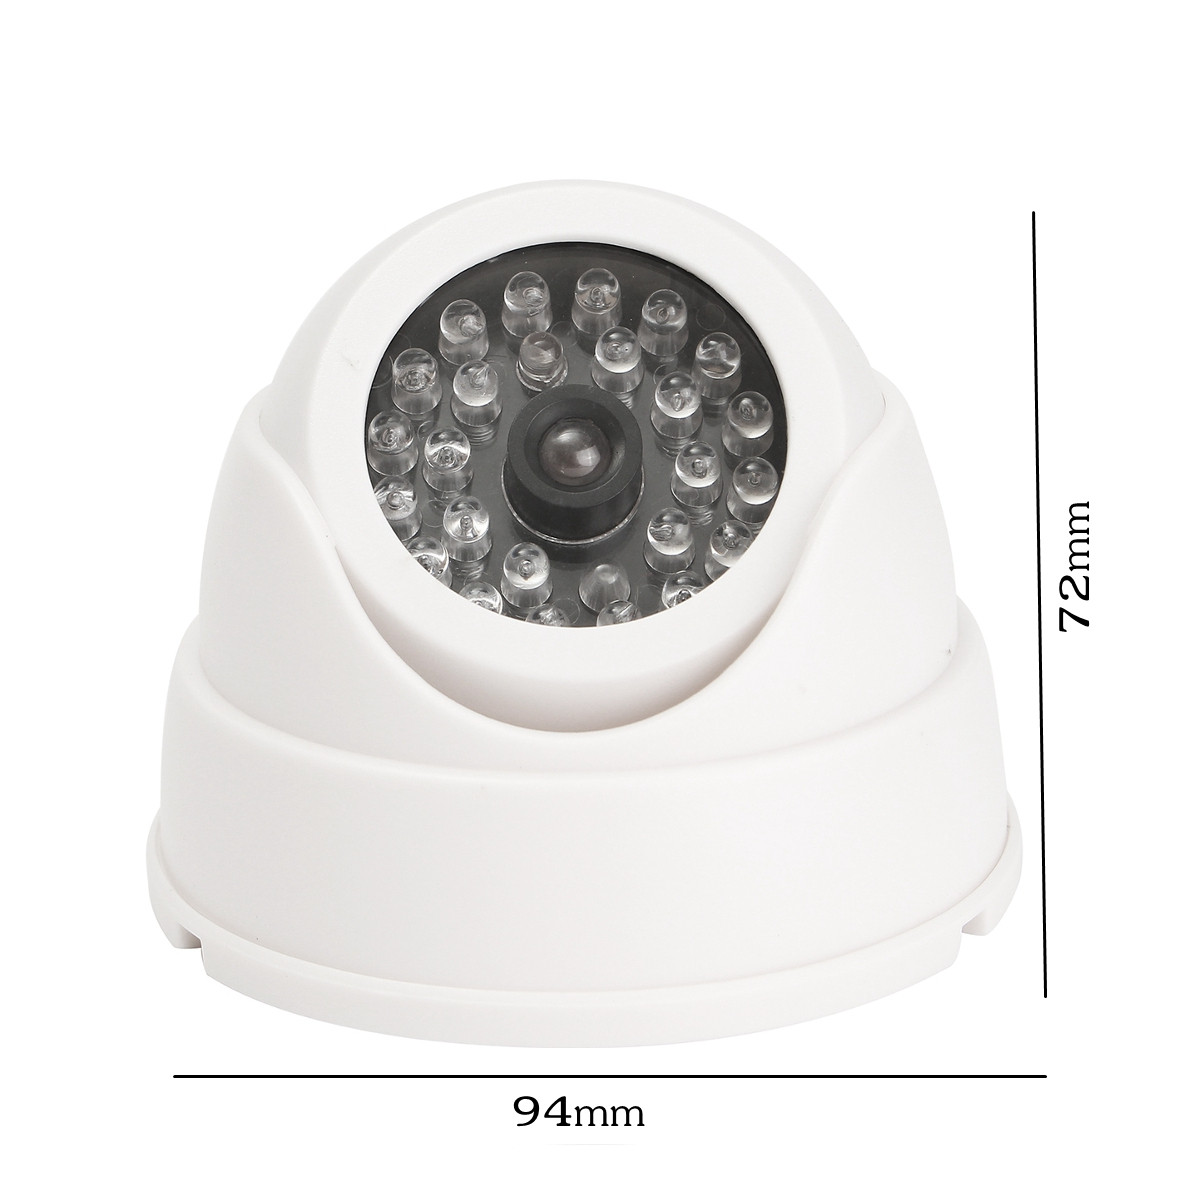 25-LED-IR-Color-Night-Video-Dome-Fake-CCTV-Camera-Home-Security-Surveillan-1105961